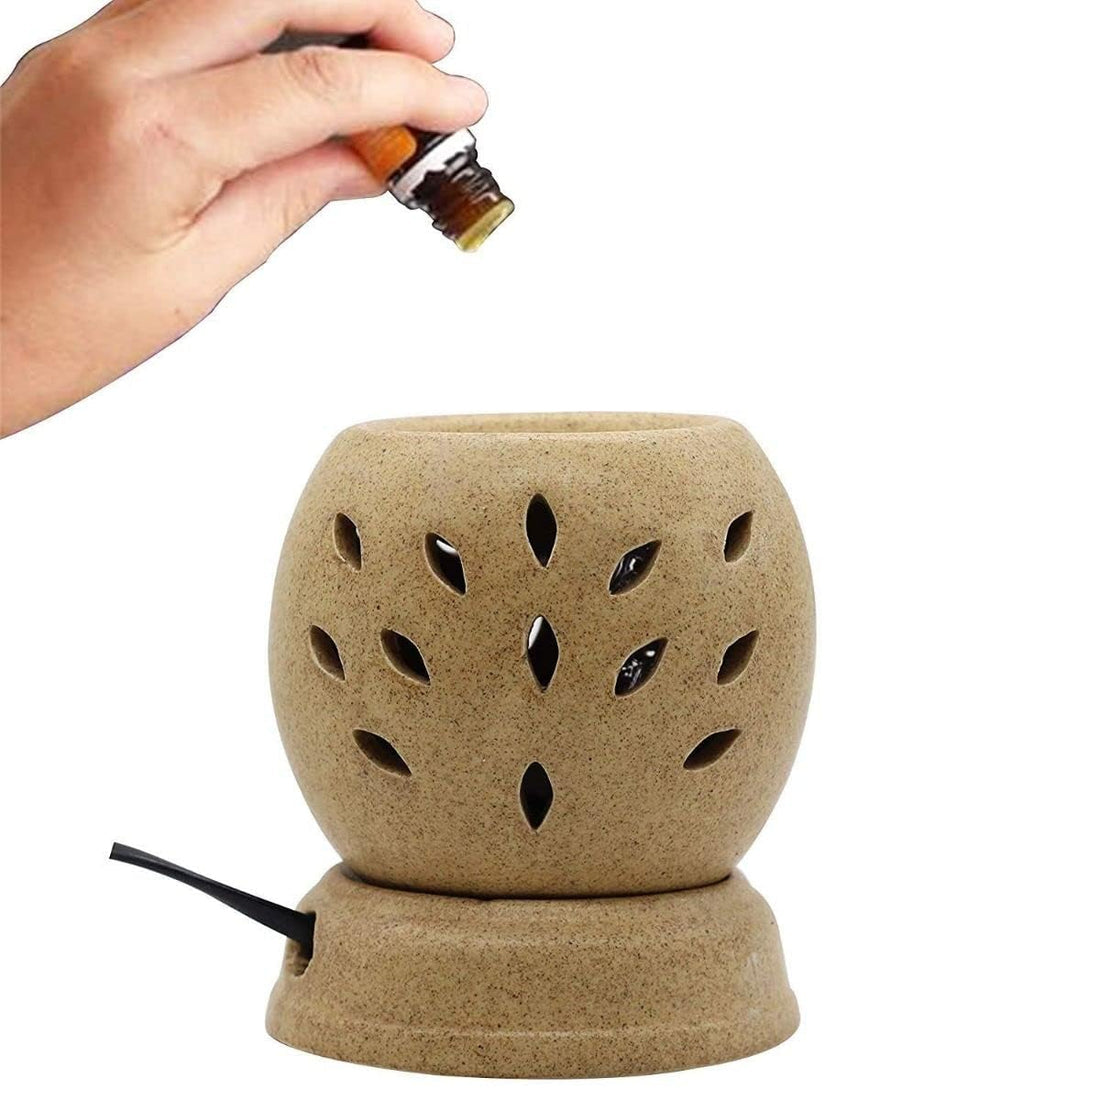 Round Ceramic Electric Aroma Diffuser and Oil Burner (Brown)